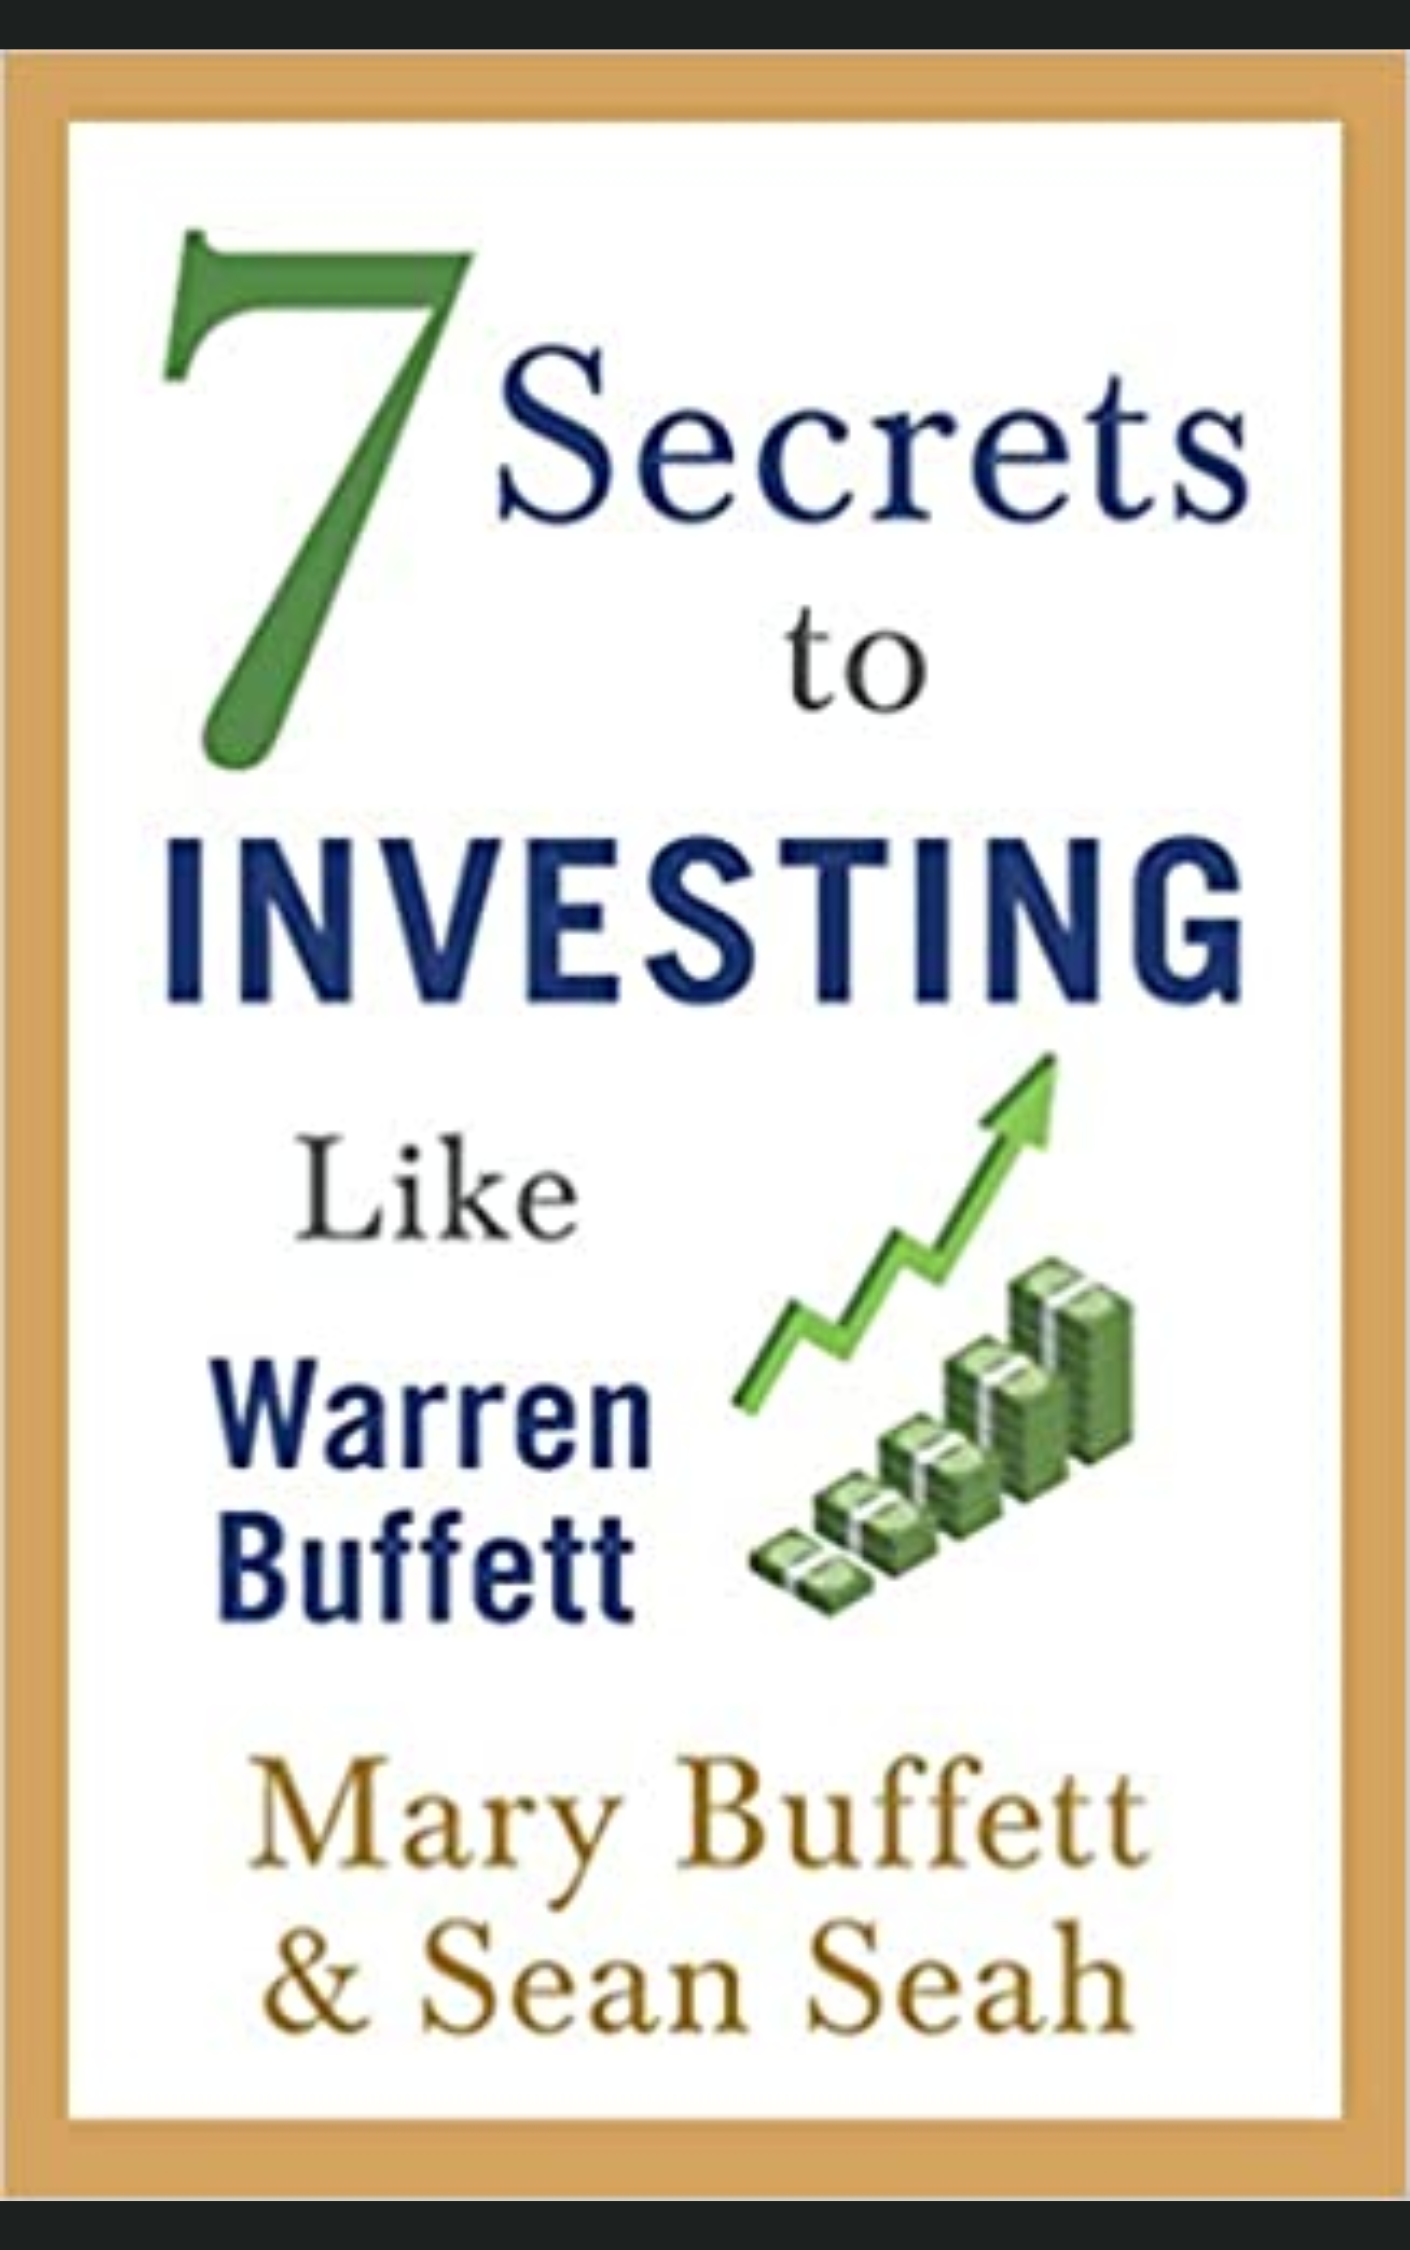 7 SECRETS TO INVESTING LIKE WARREN BUFFET by MARY BUFFET